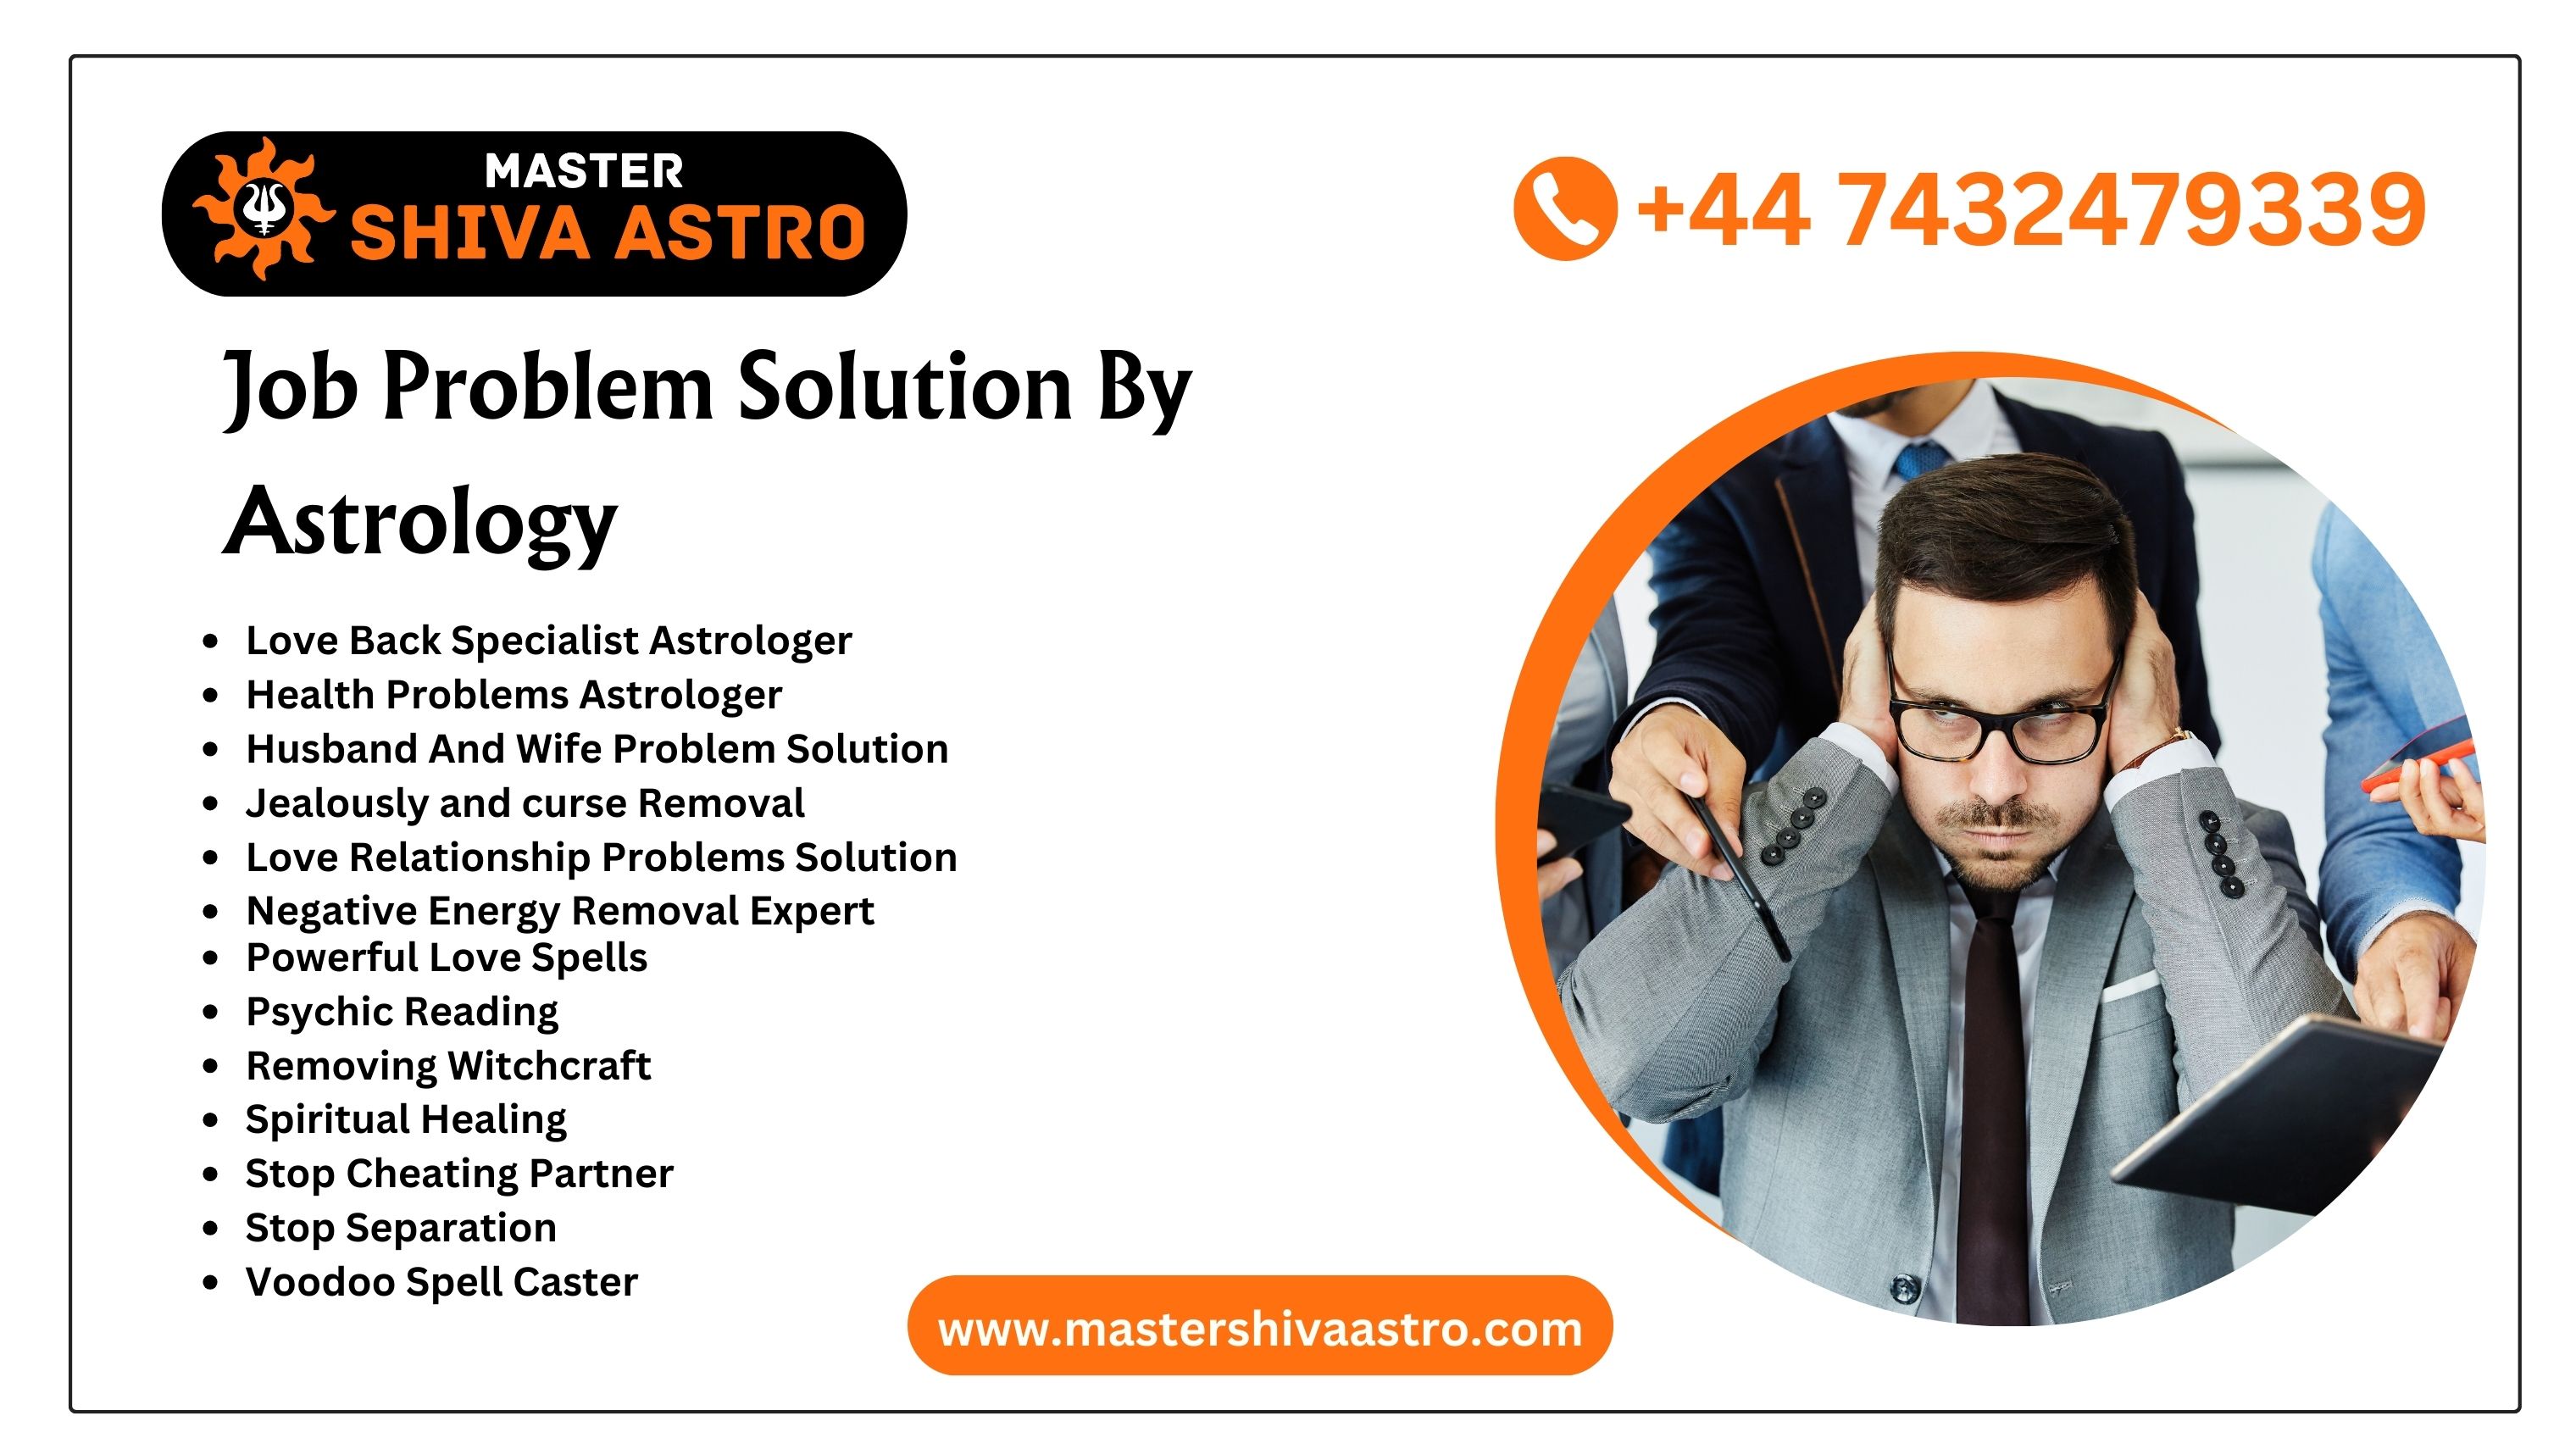 Job Problem Solution By Astrology - Master Shiva